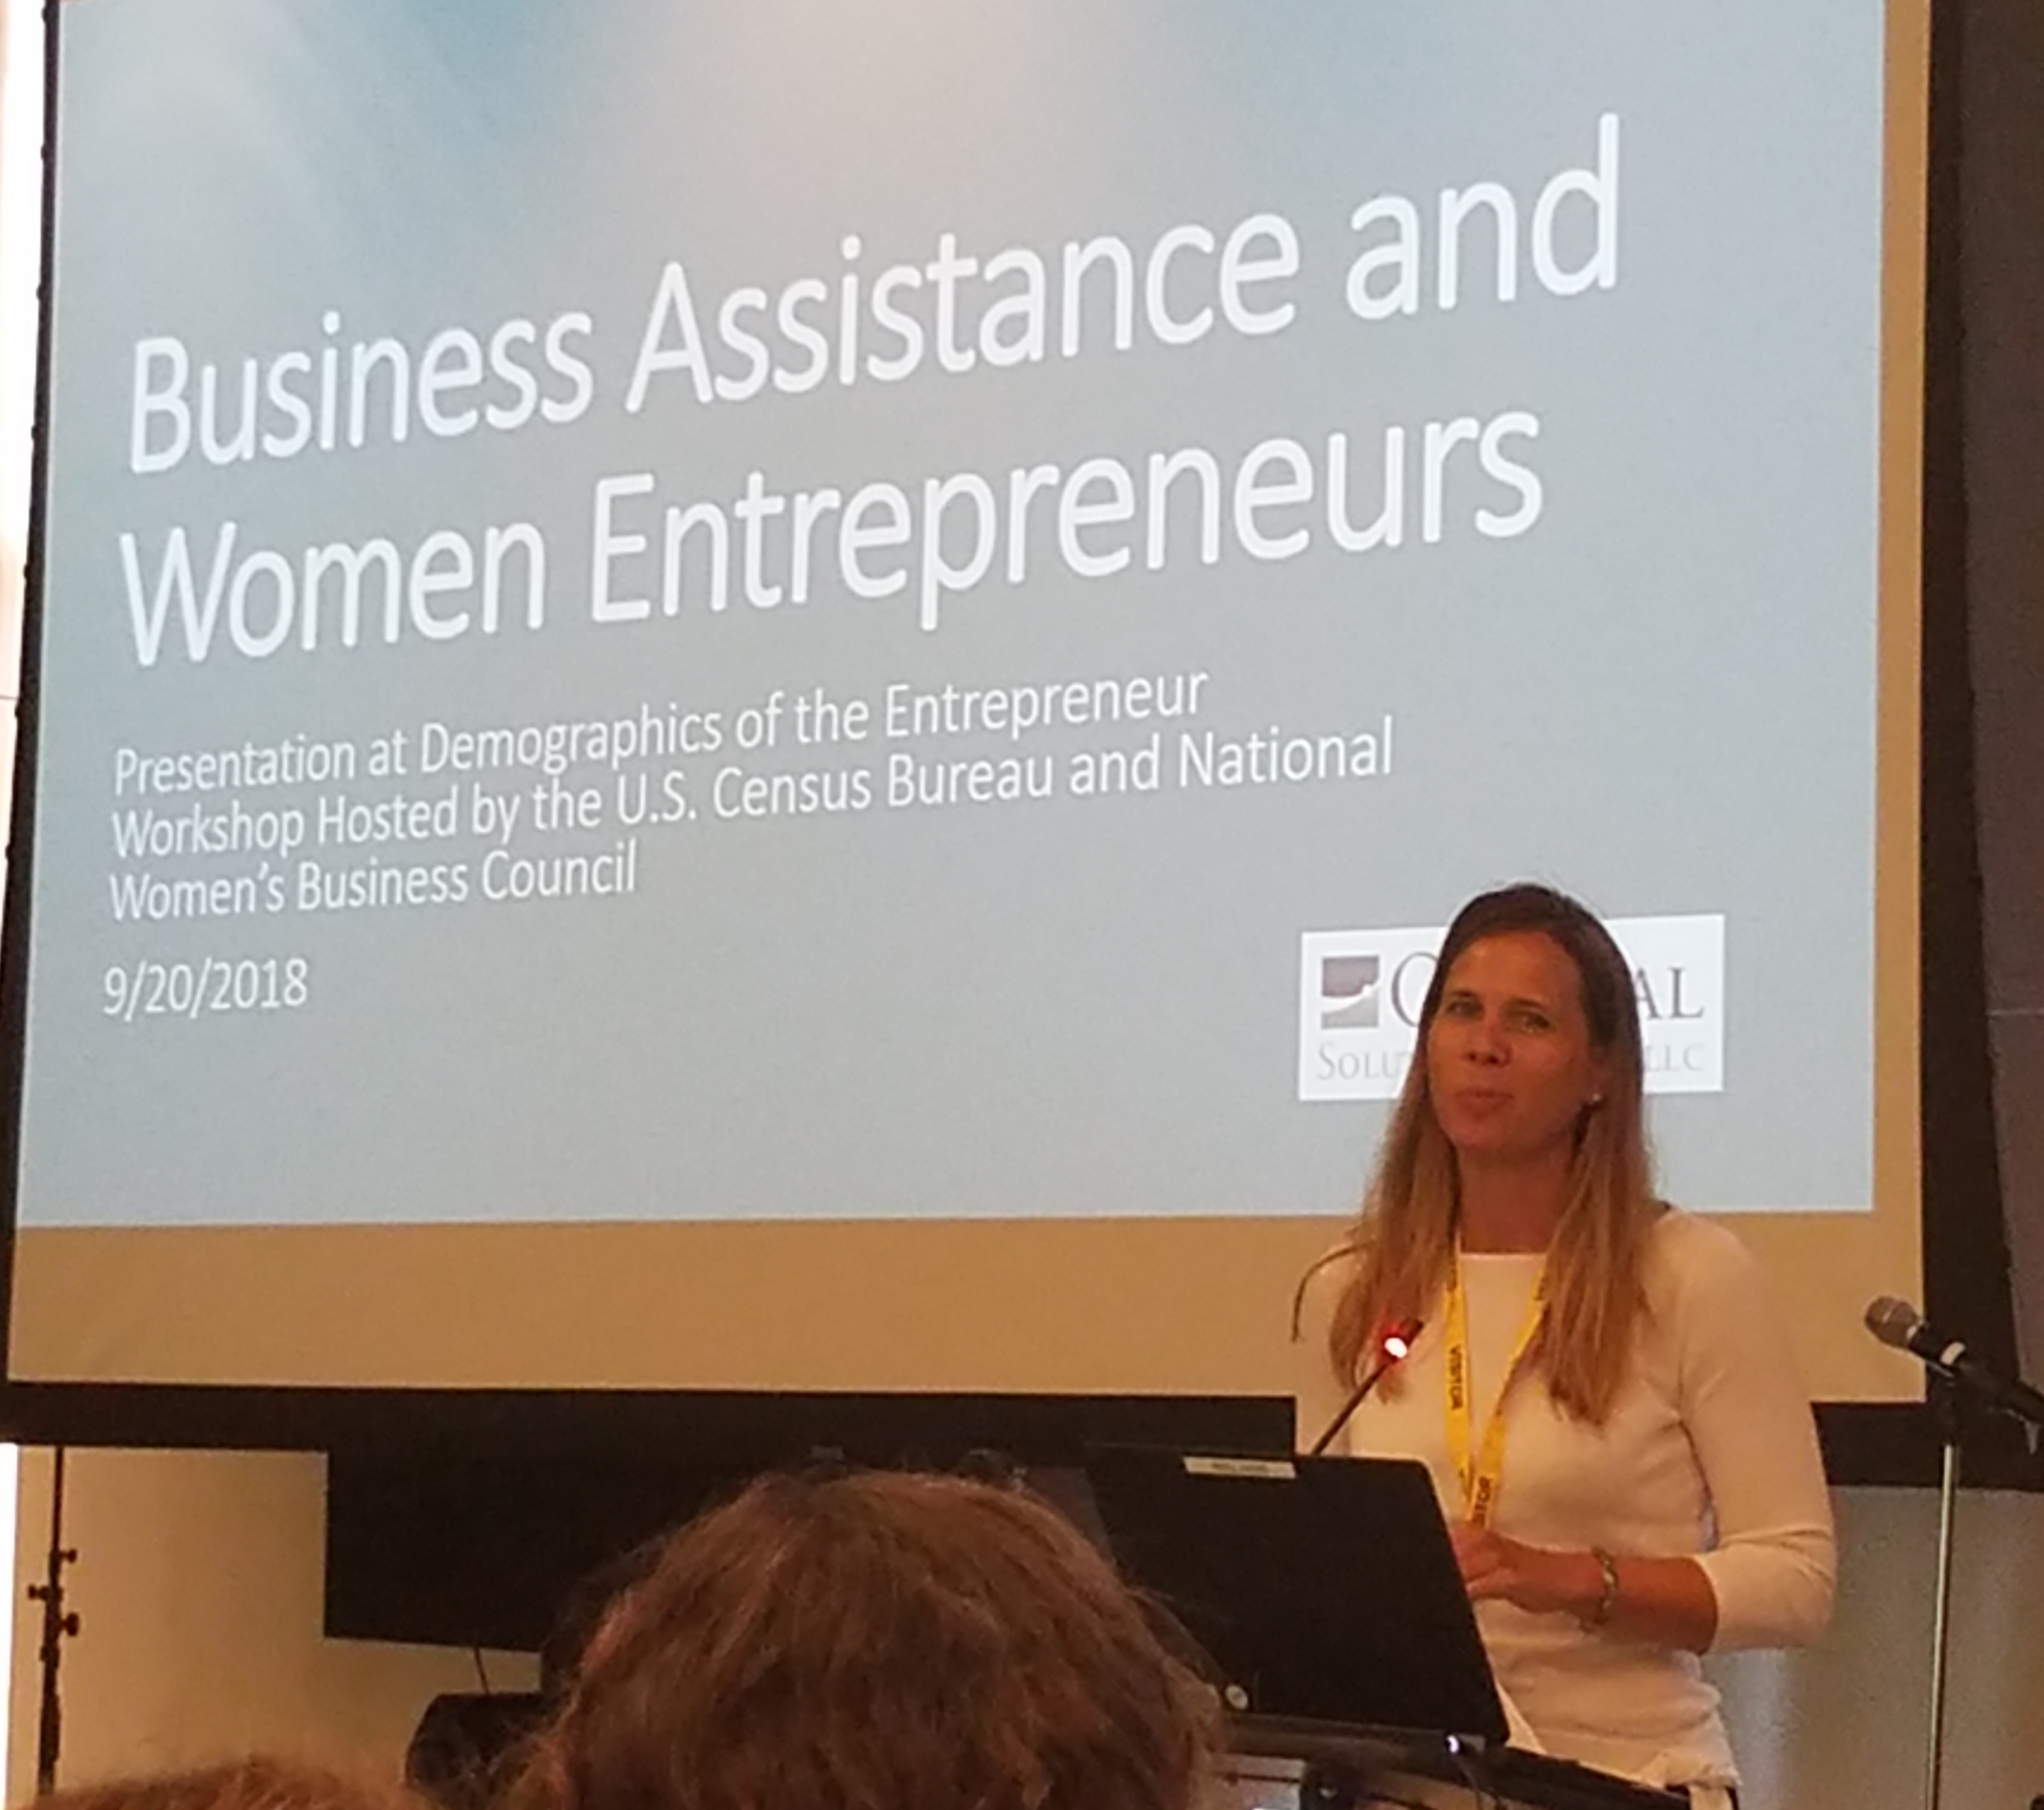 Dr. Jennifer Auer presents findings on women’s entrepreneurship at the Demographics of the Entrepreneur Workshop in Suitland, Md.